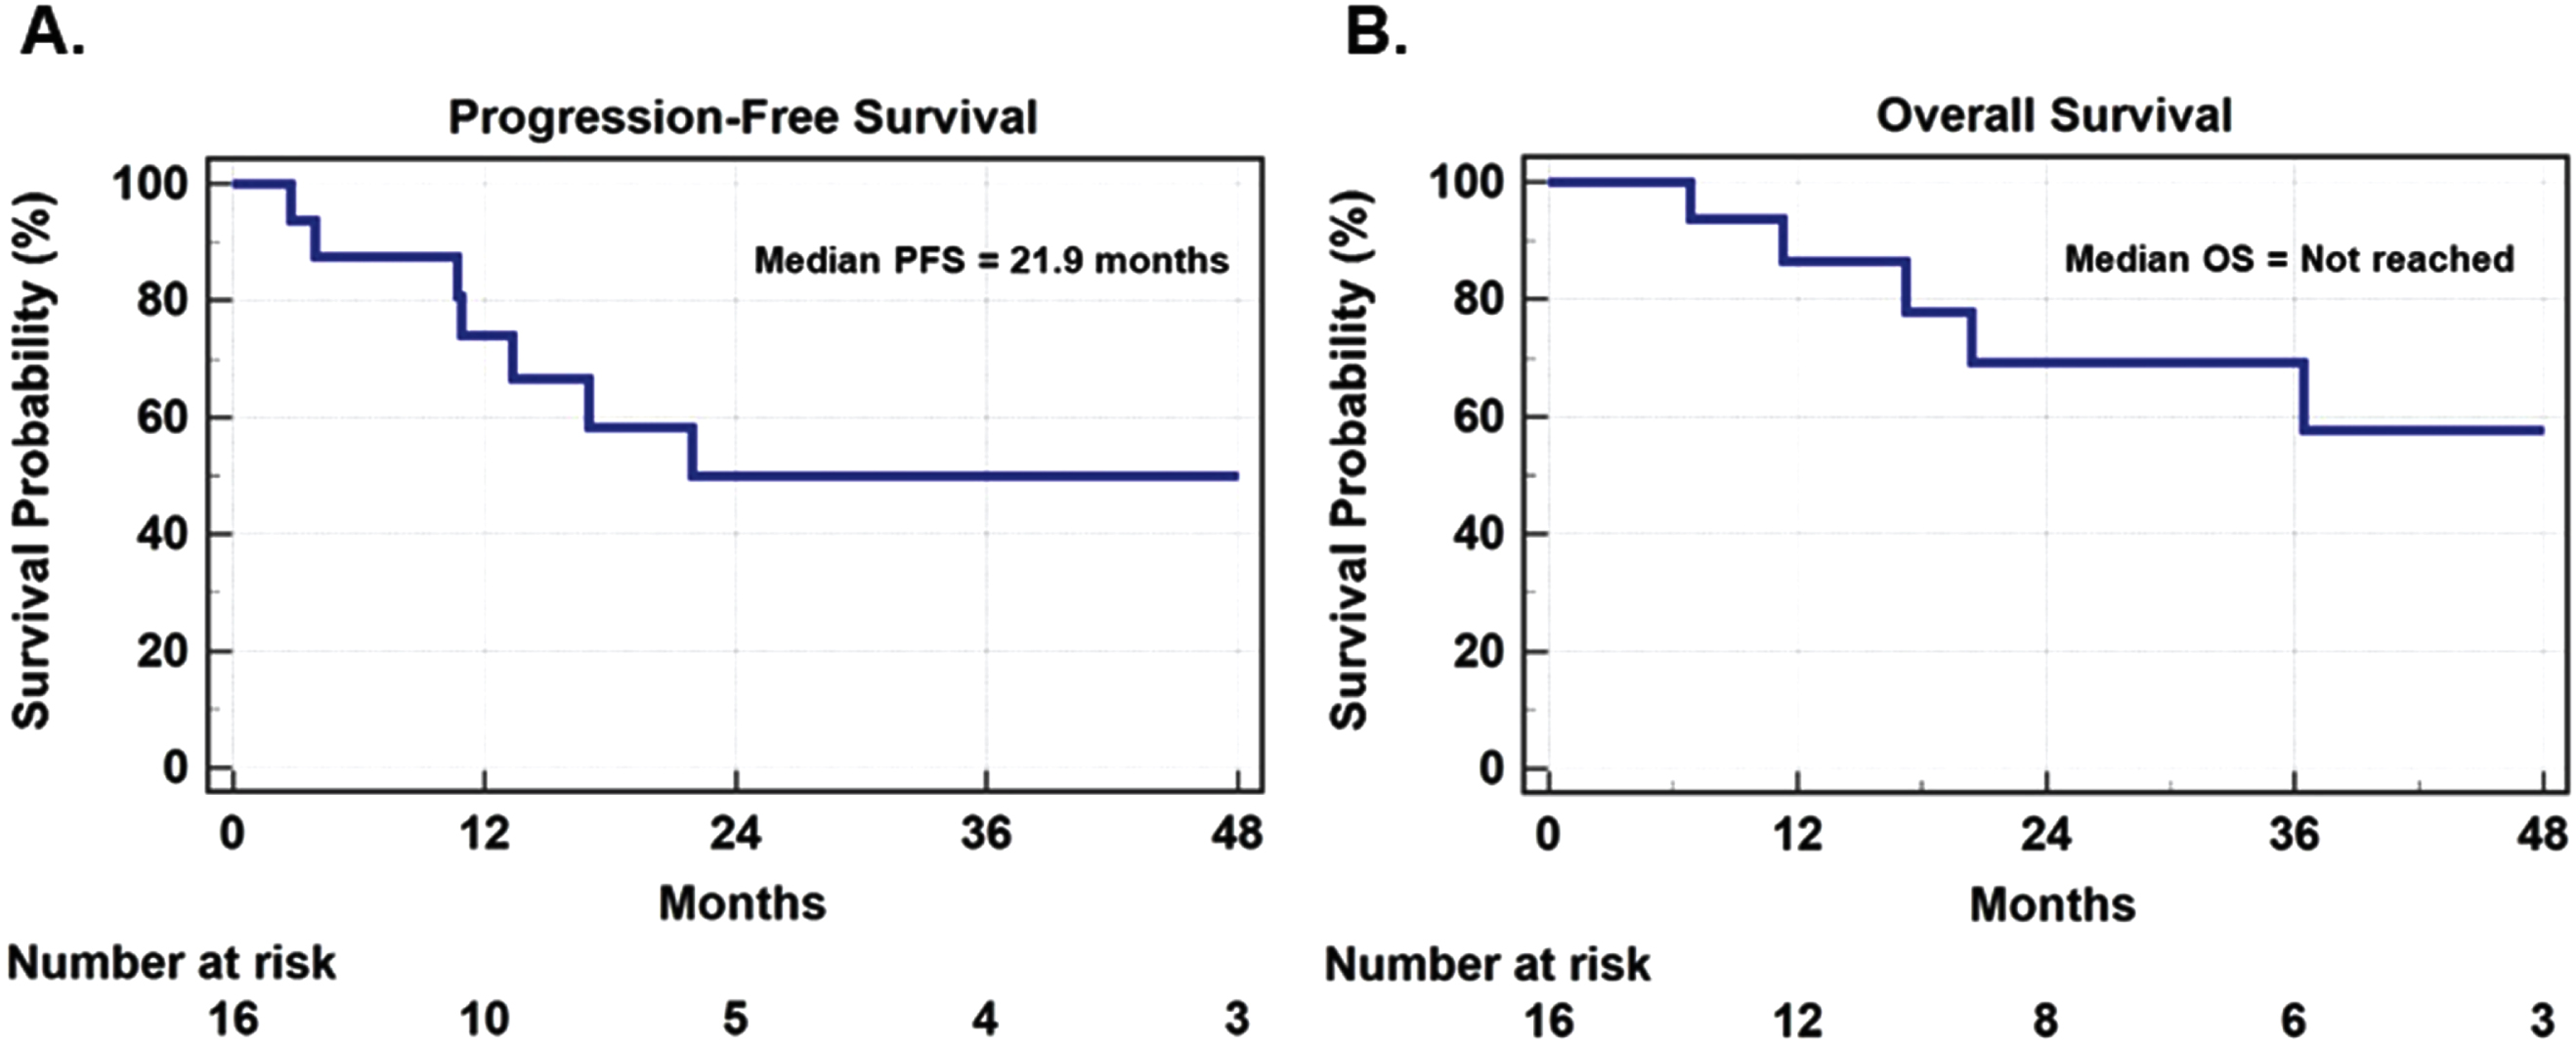 Survival Analyses of Sarcomatoid Bladder Cancer Patients treated with Neoadjuvant Cisplatin+Gemcitabine+Docetaxel. A. Progression-Free Survival, B. Overall Survival.